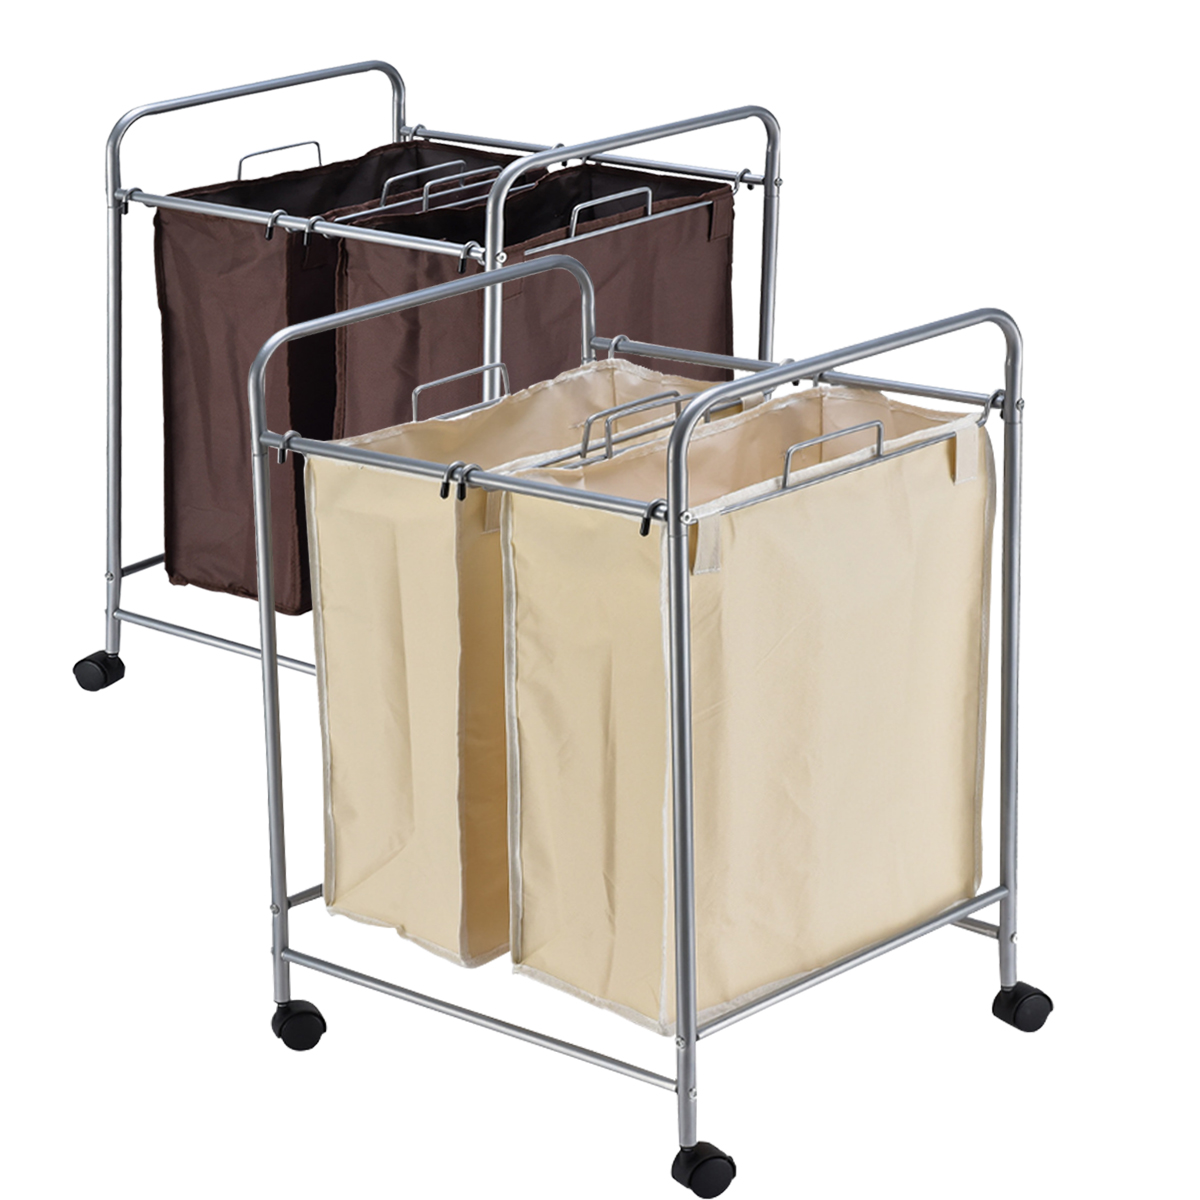 

Multifunction Mobile Double Bag Compact Laundry Hamper Sorter Cart Clothes Storage Bag